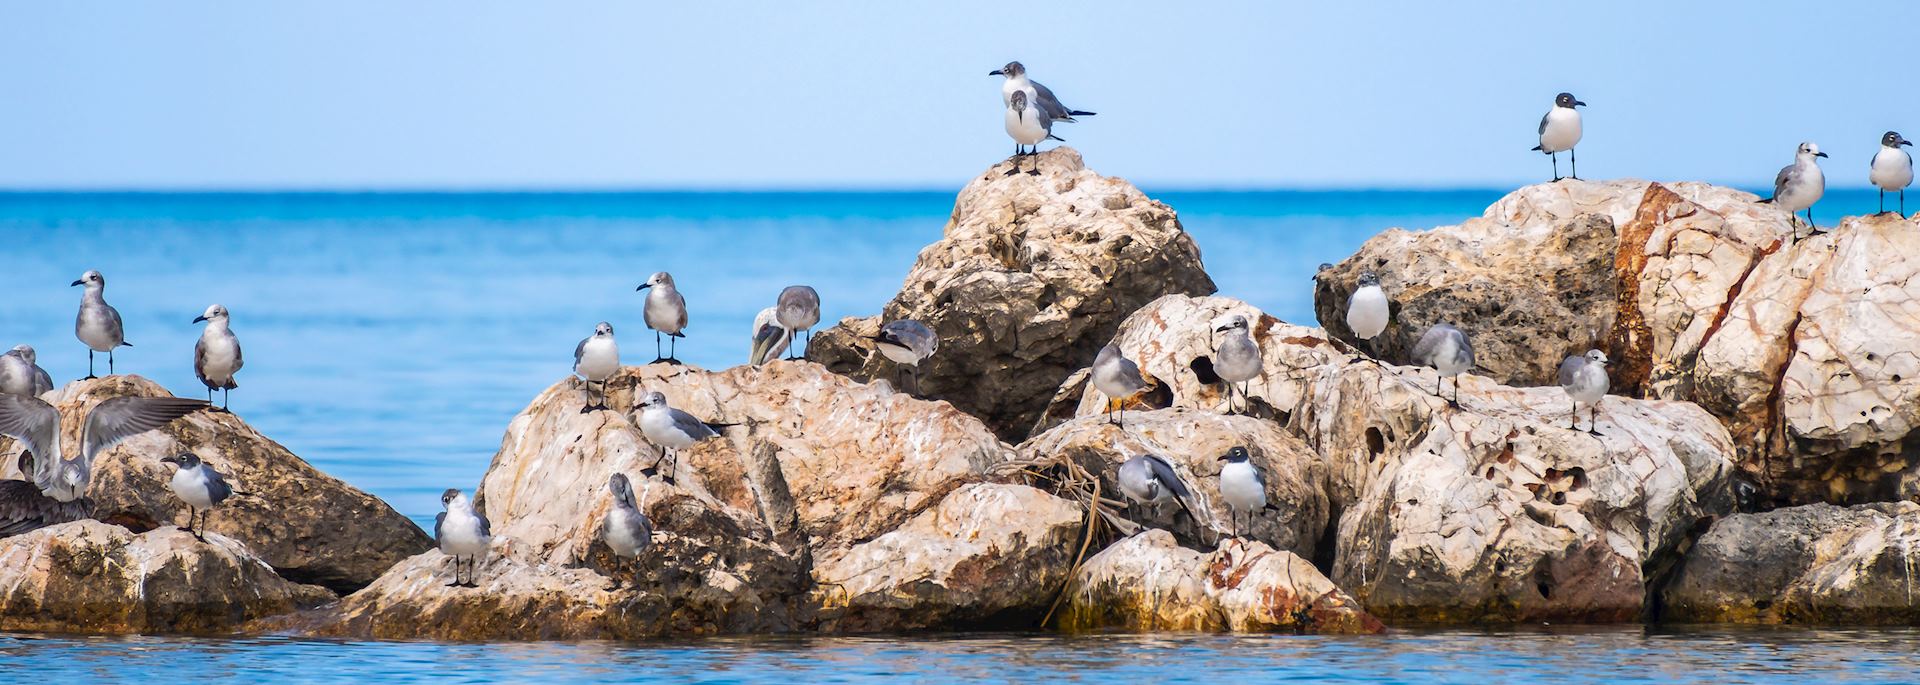 Birds on the rocks in Montego Bay, Jamaica